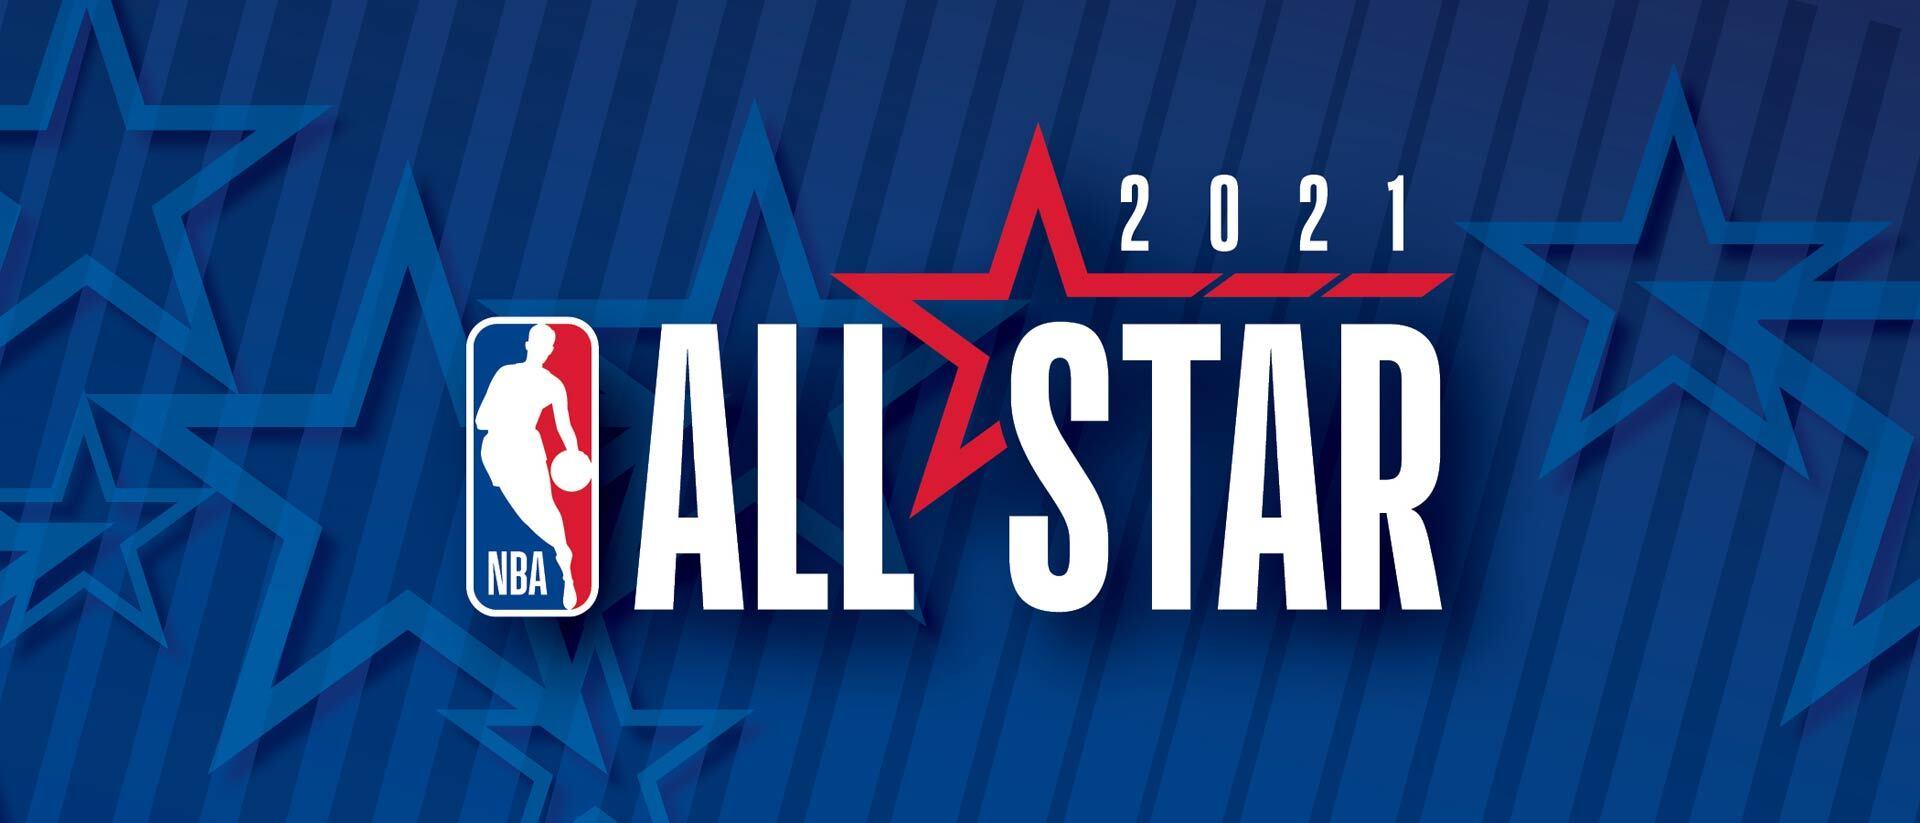 "All Star" utakmica igra se 7. marta u Atlanti - Avaz